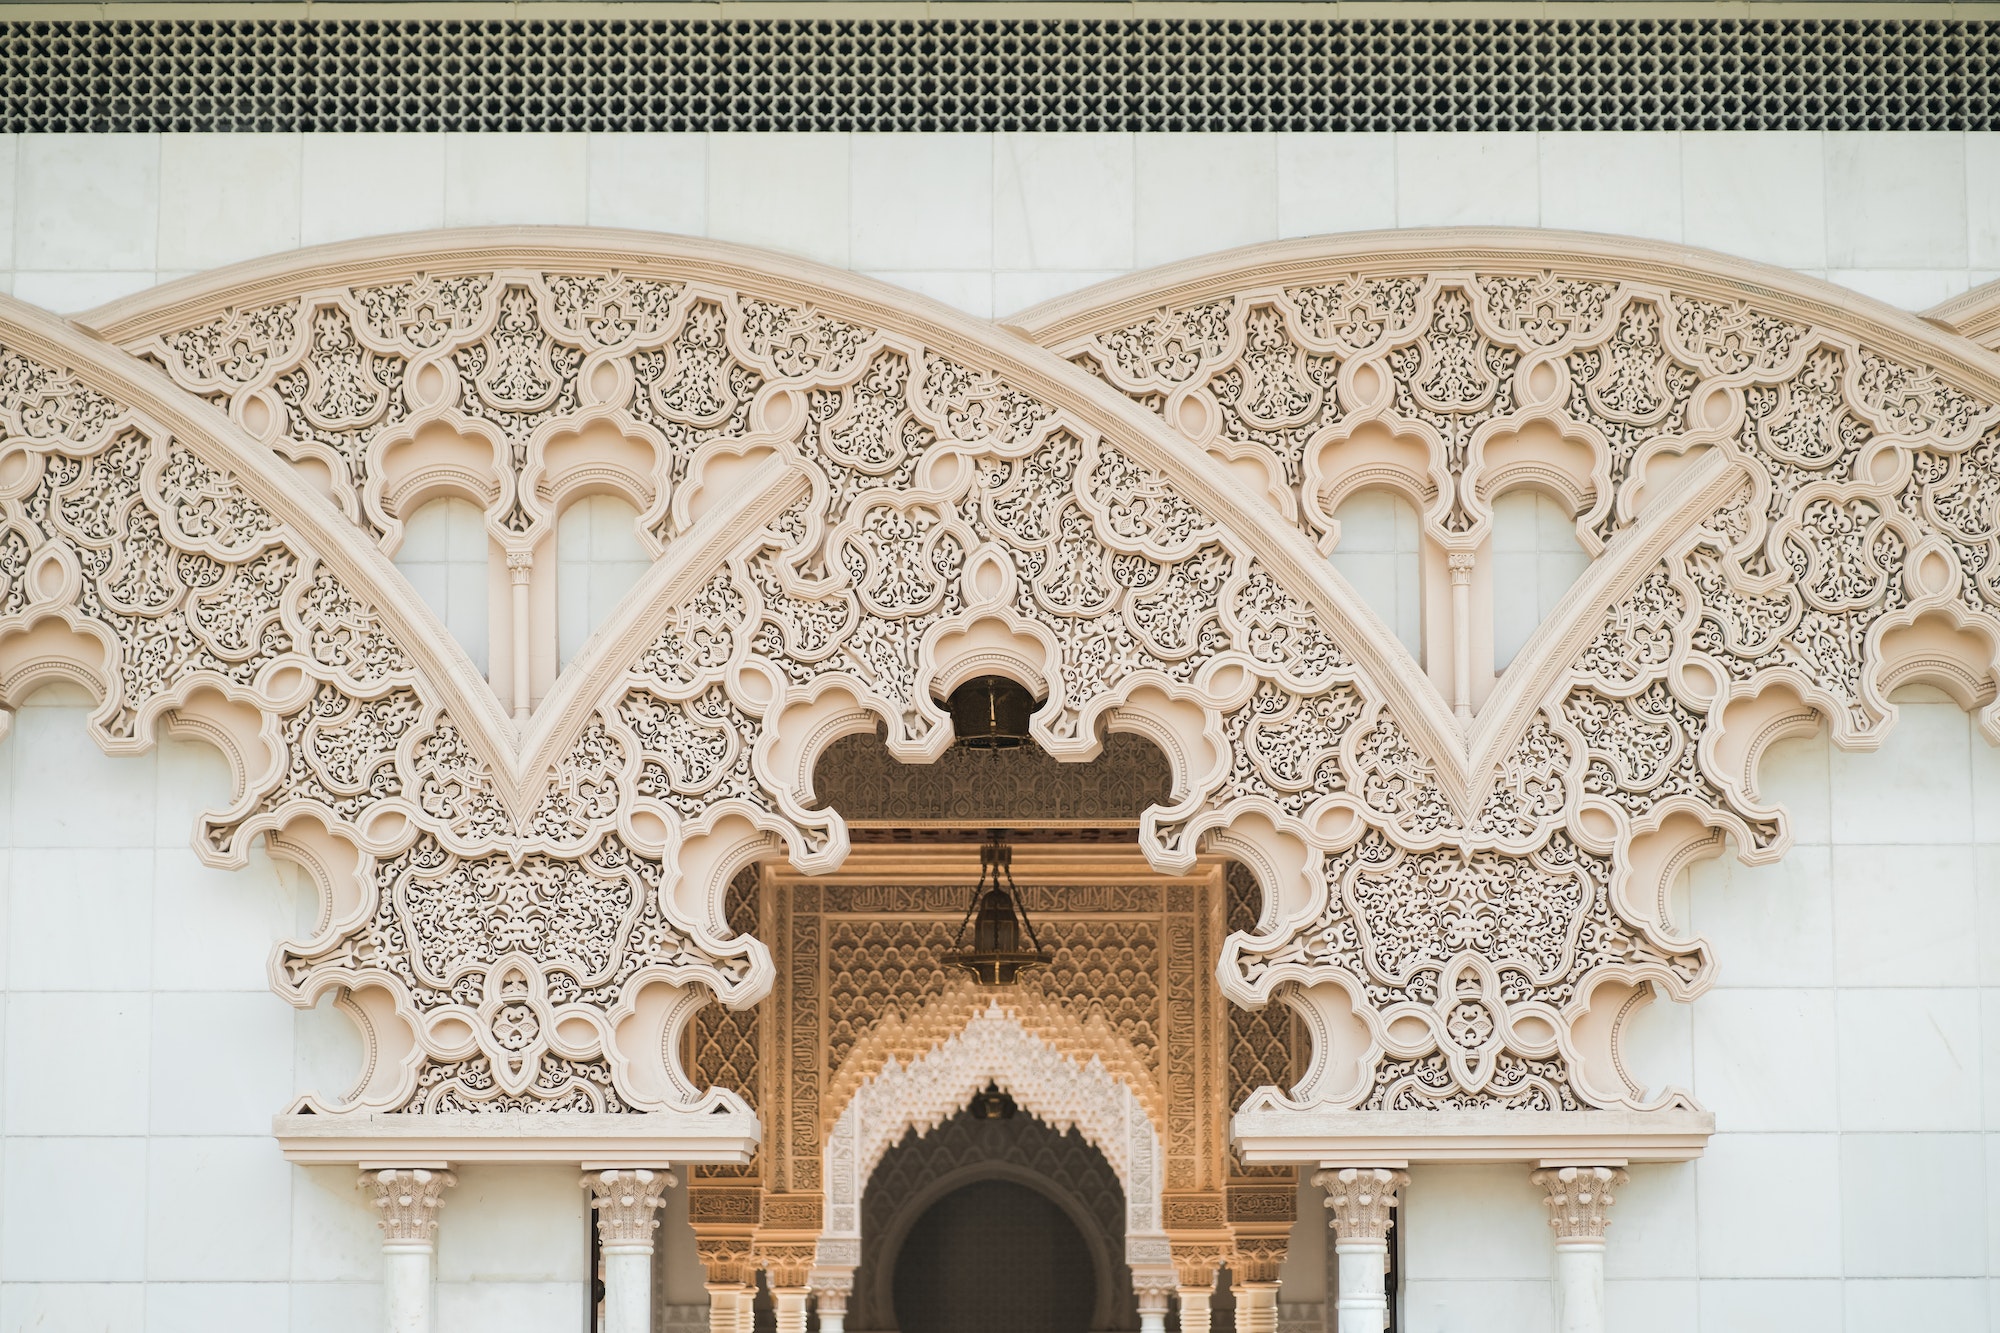 morrocoan architecture details on the enterance. islamic, arabian design